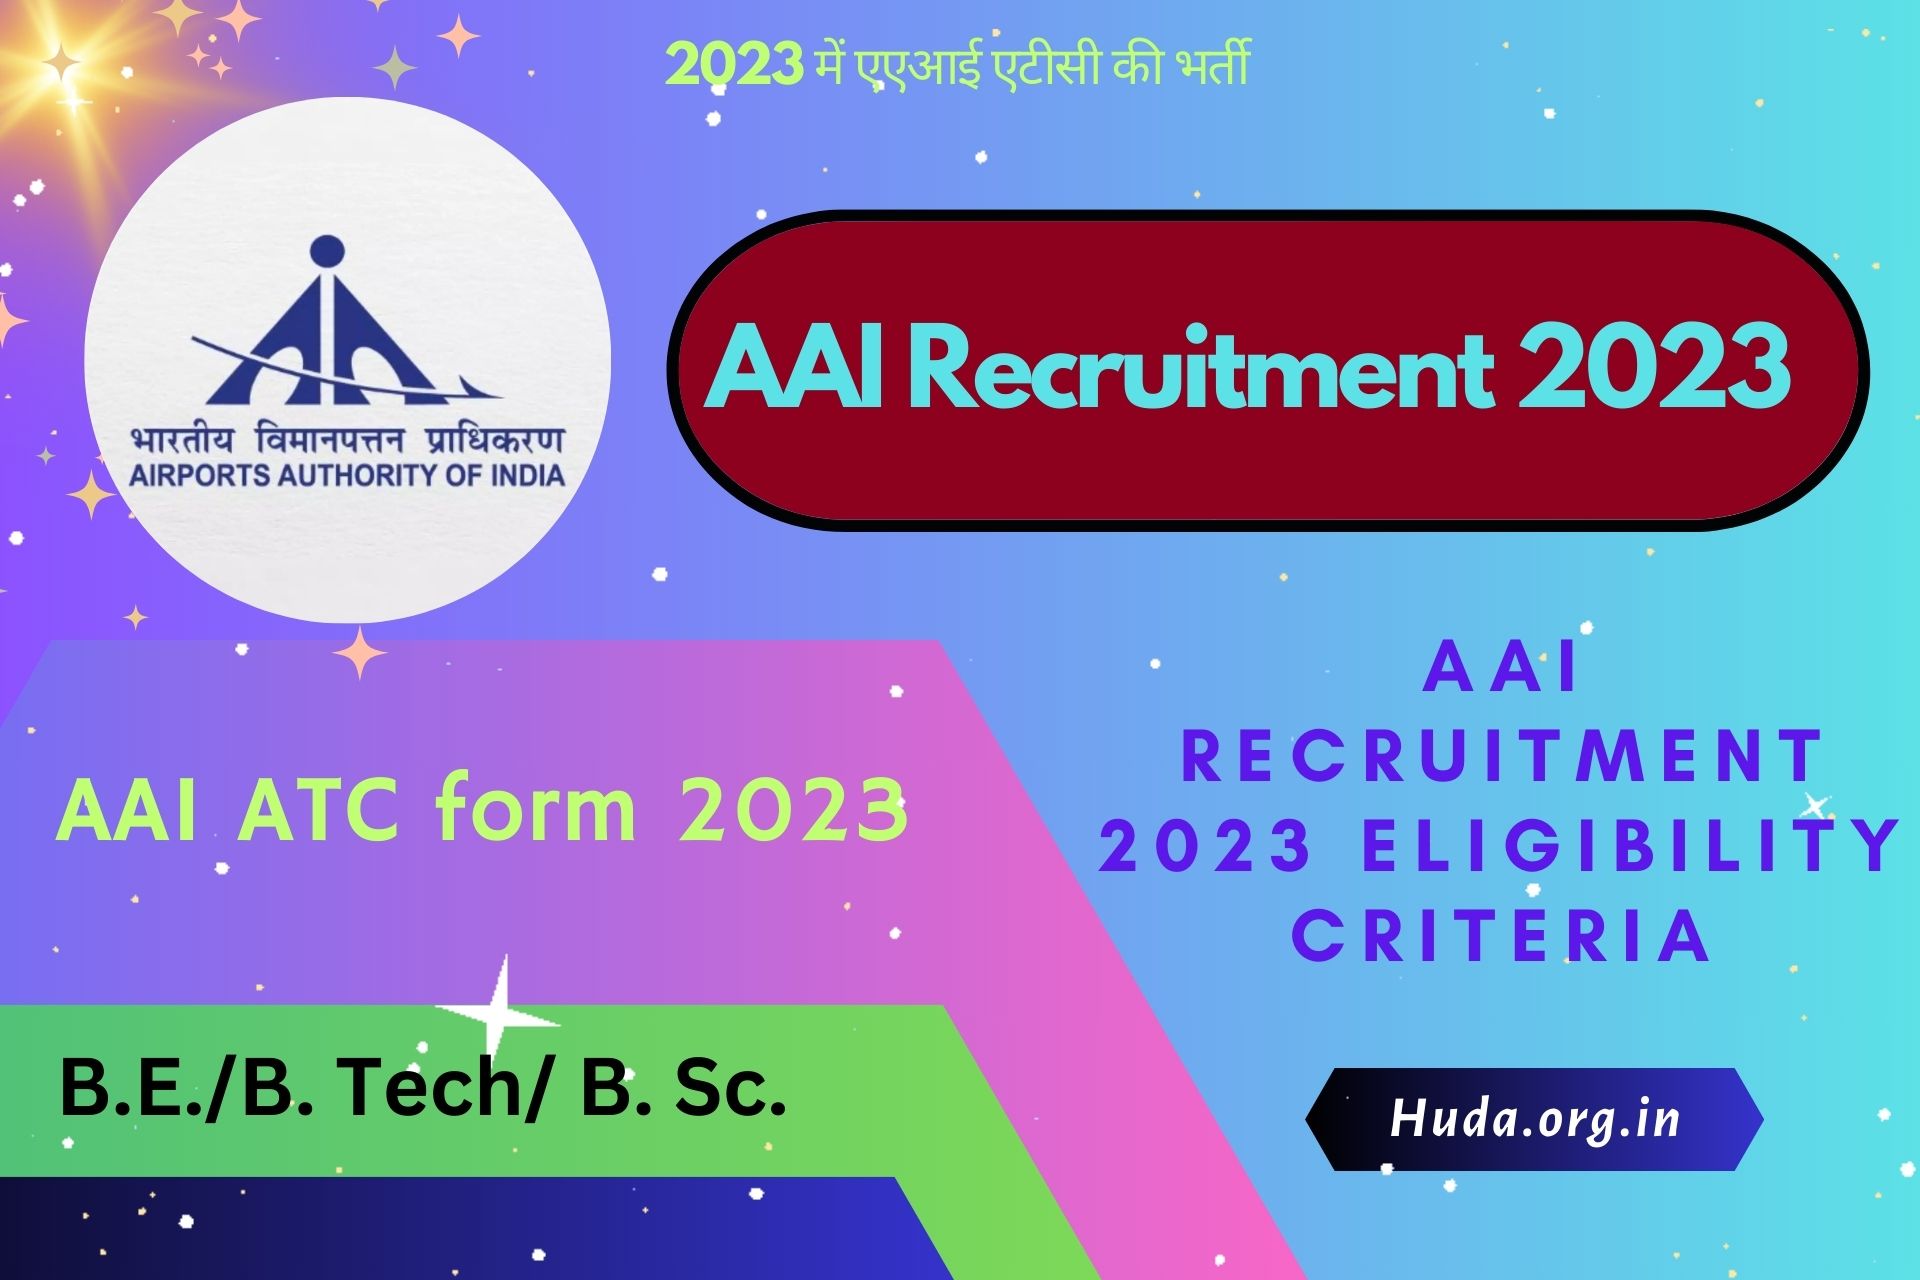 AAI Recruitment 2023 Eligibility Criteria